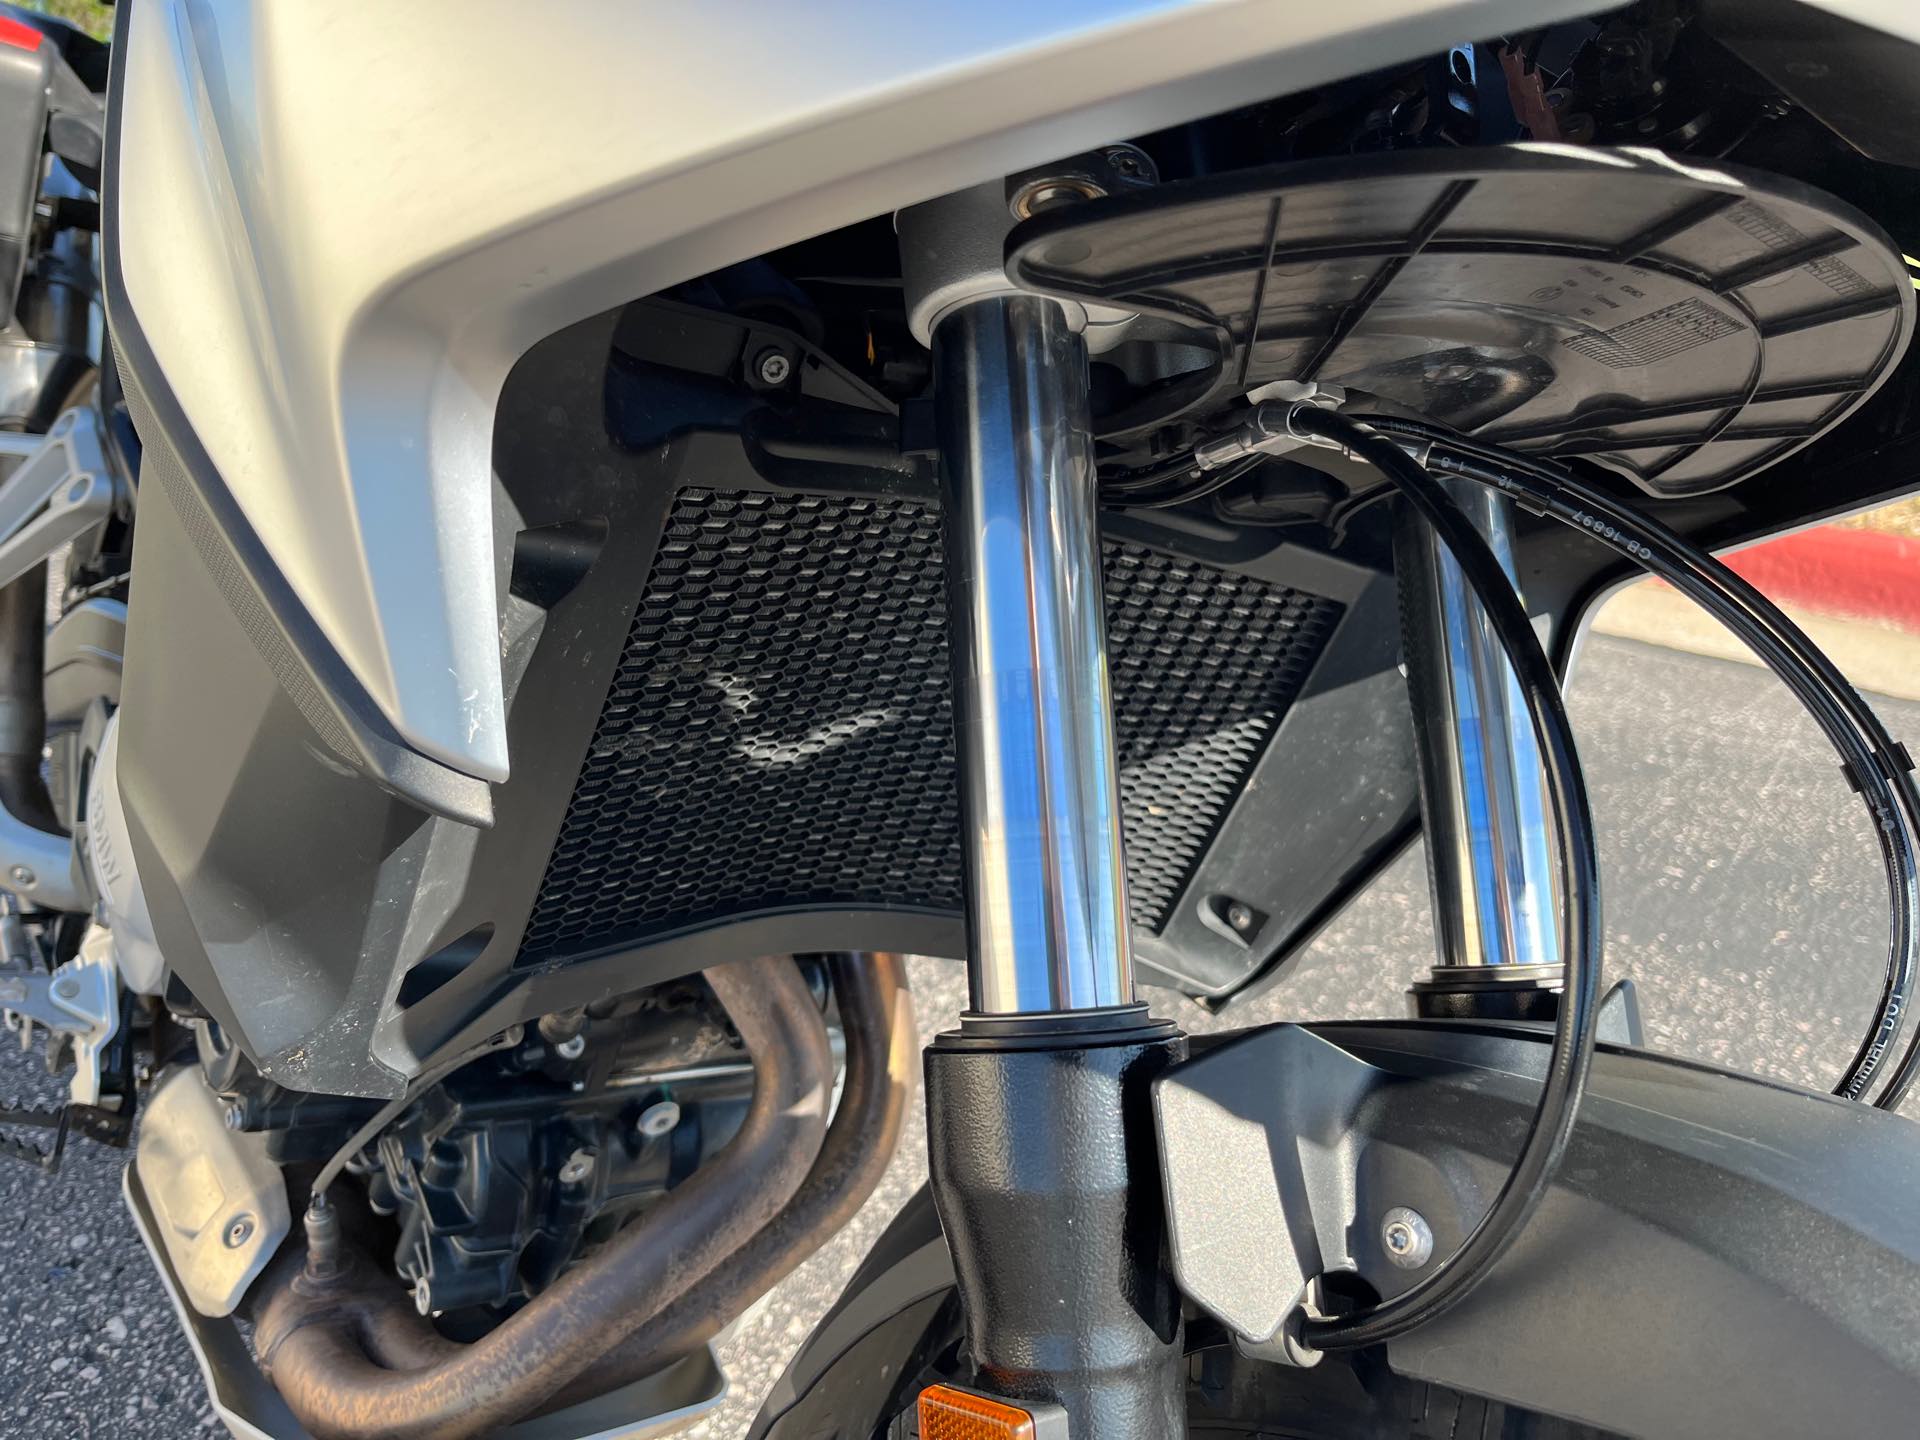 2019 BMW F 750 GS at Mount Rushmore Motorsports